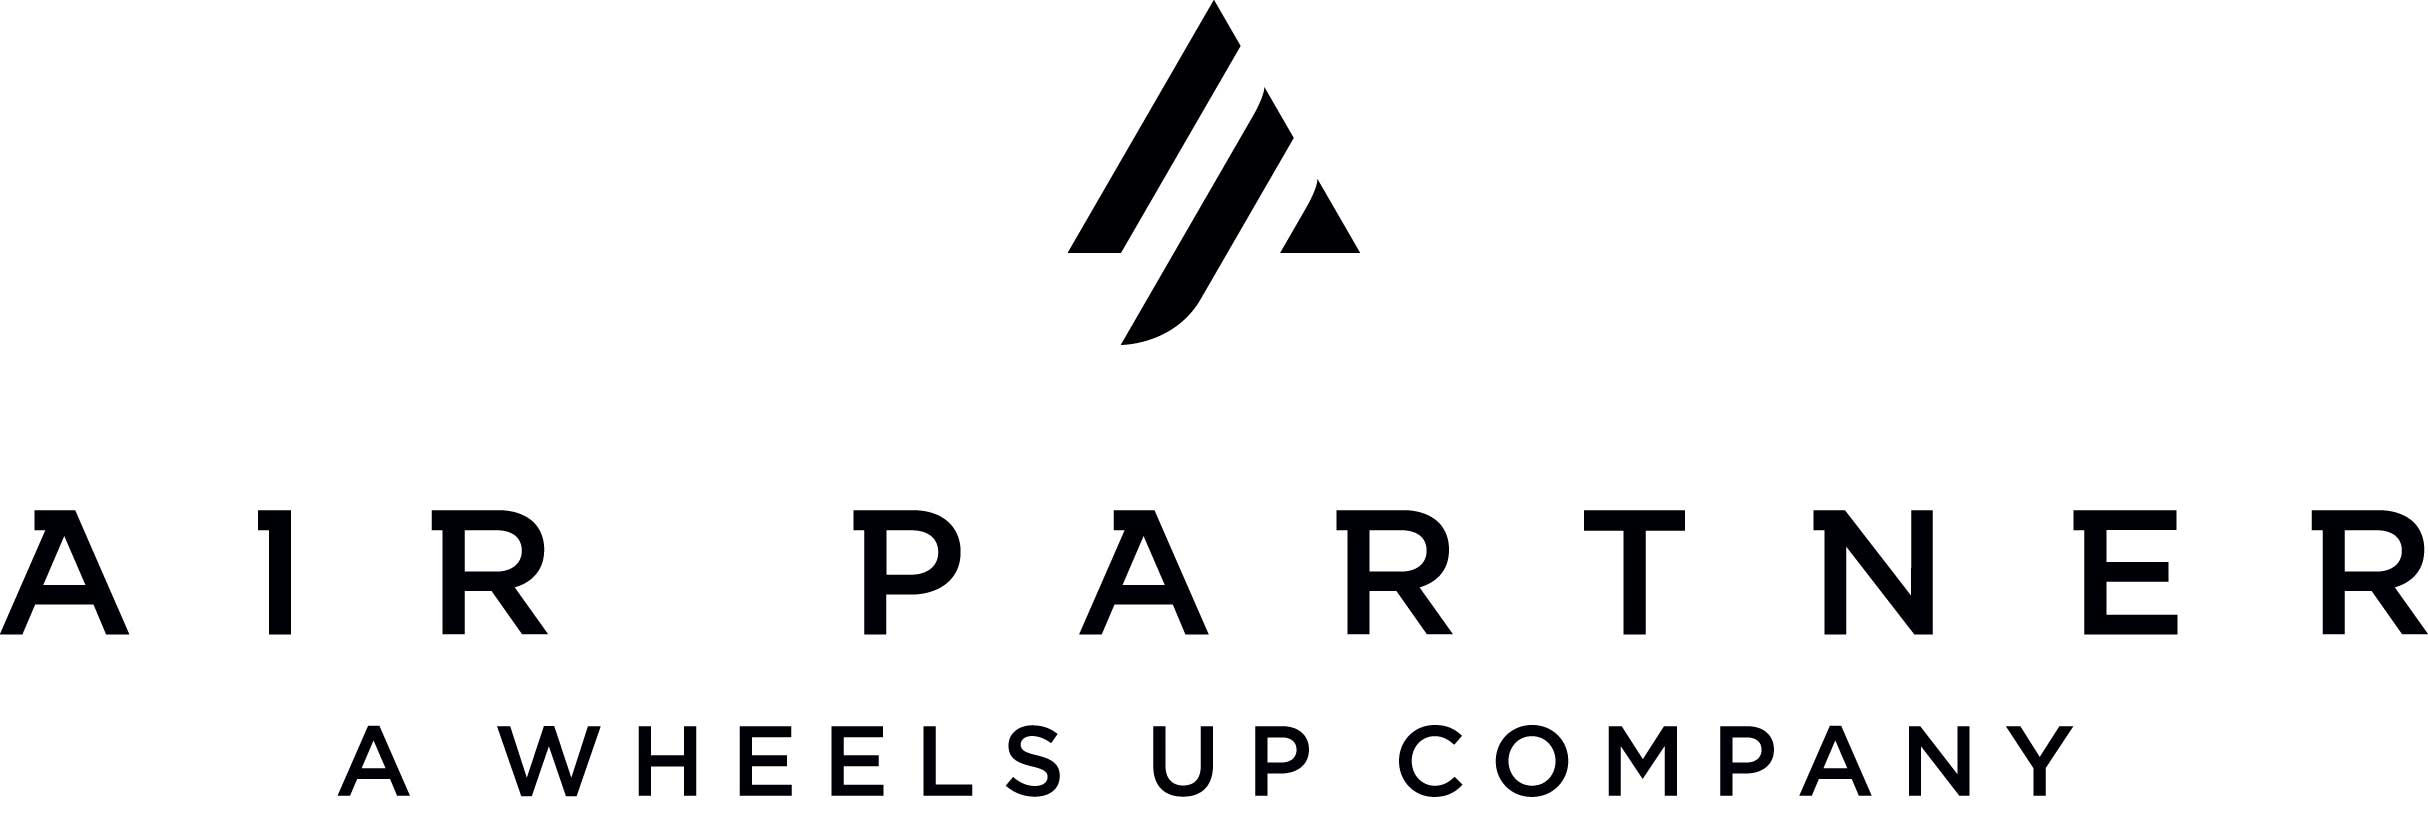 Air Partner, a Wheels Up Company